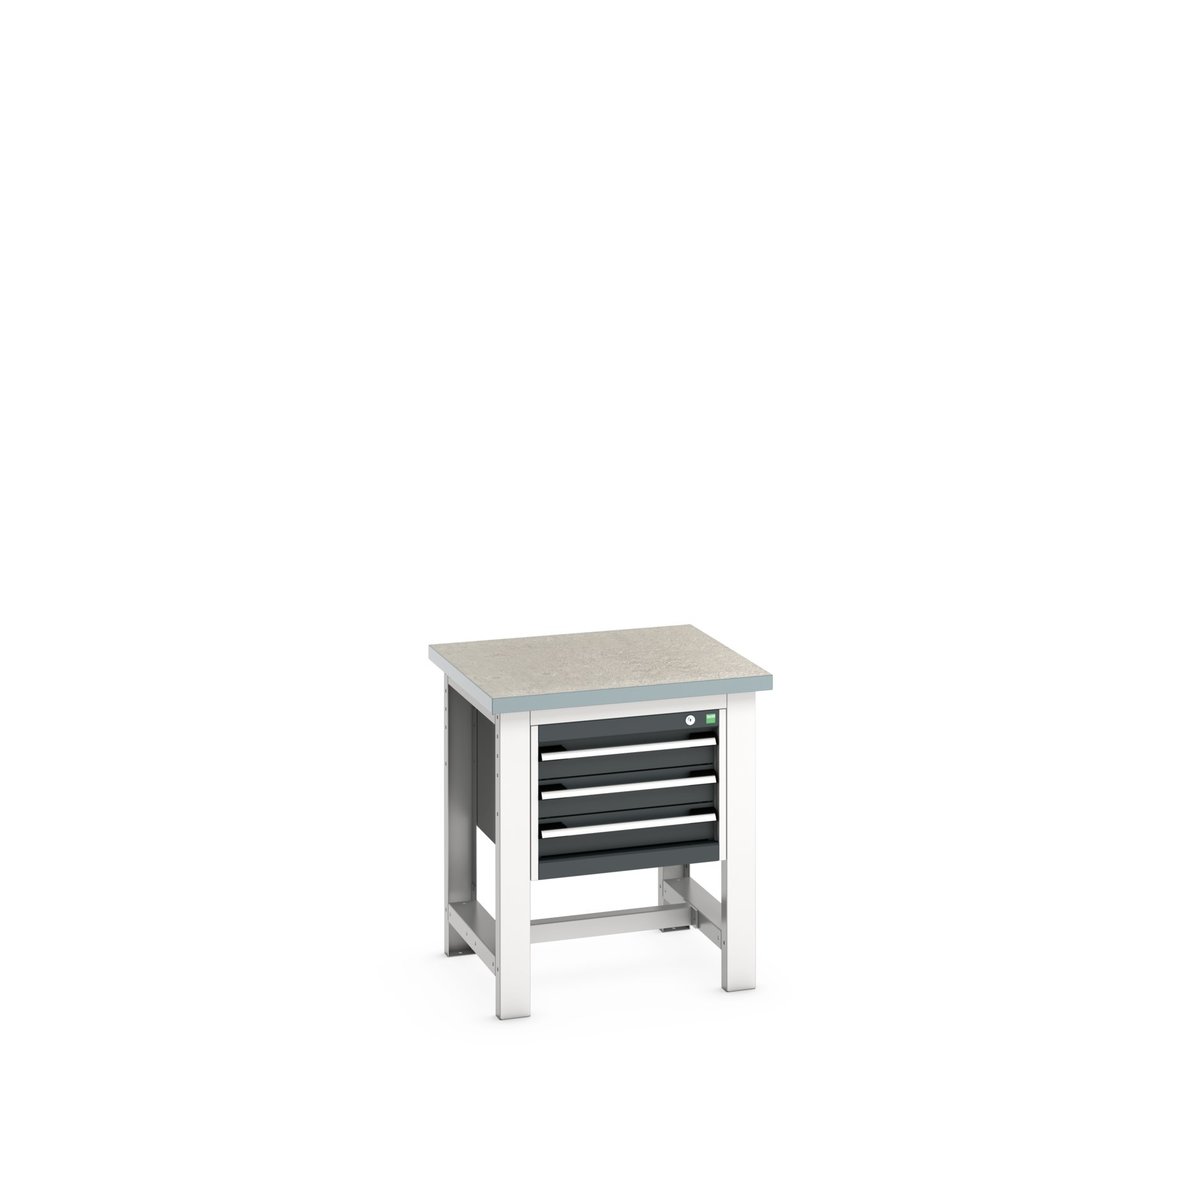 41003526. - cubio framework bench (lino)